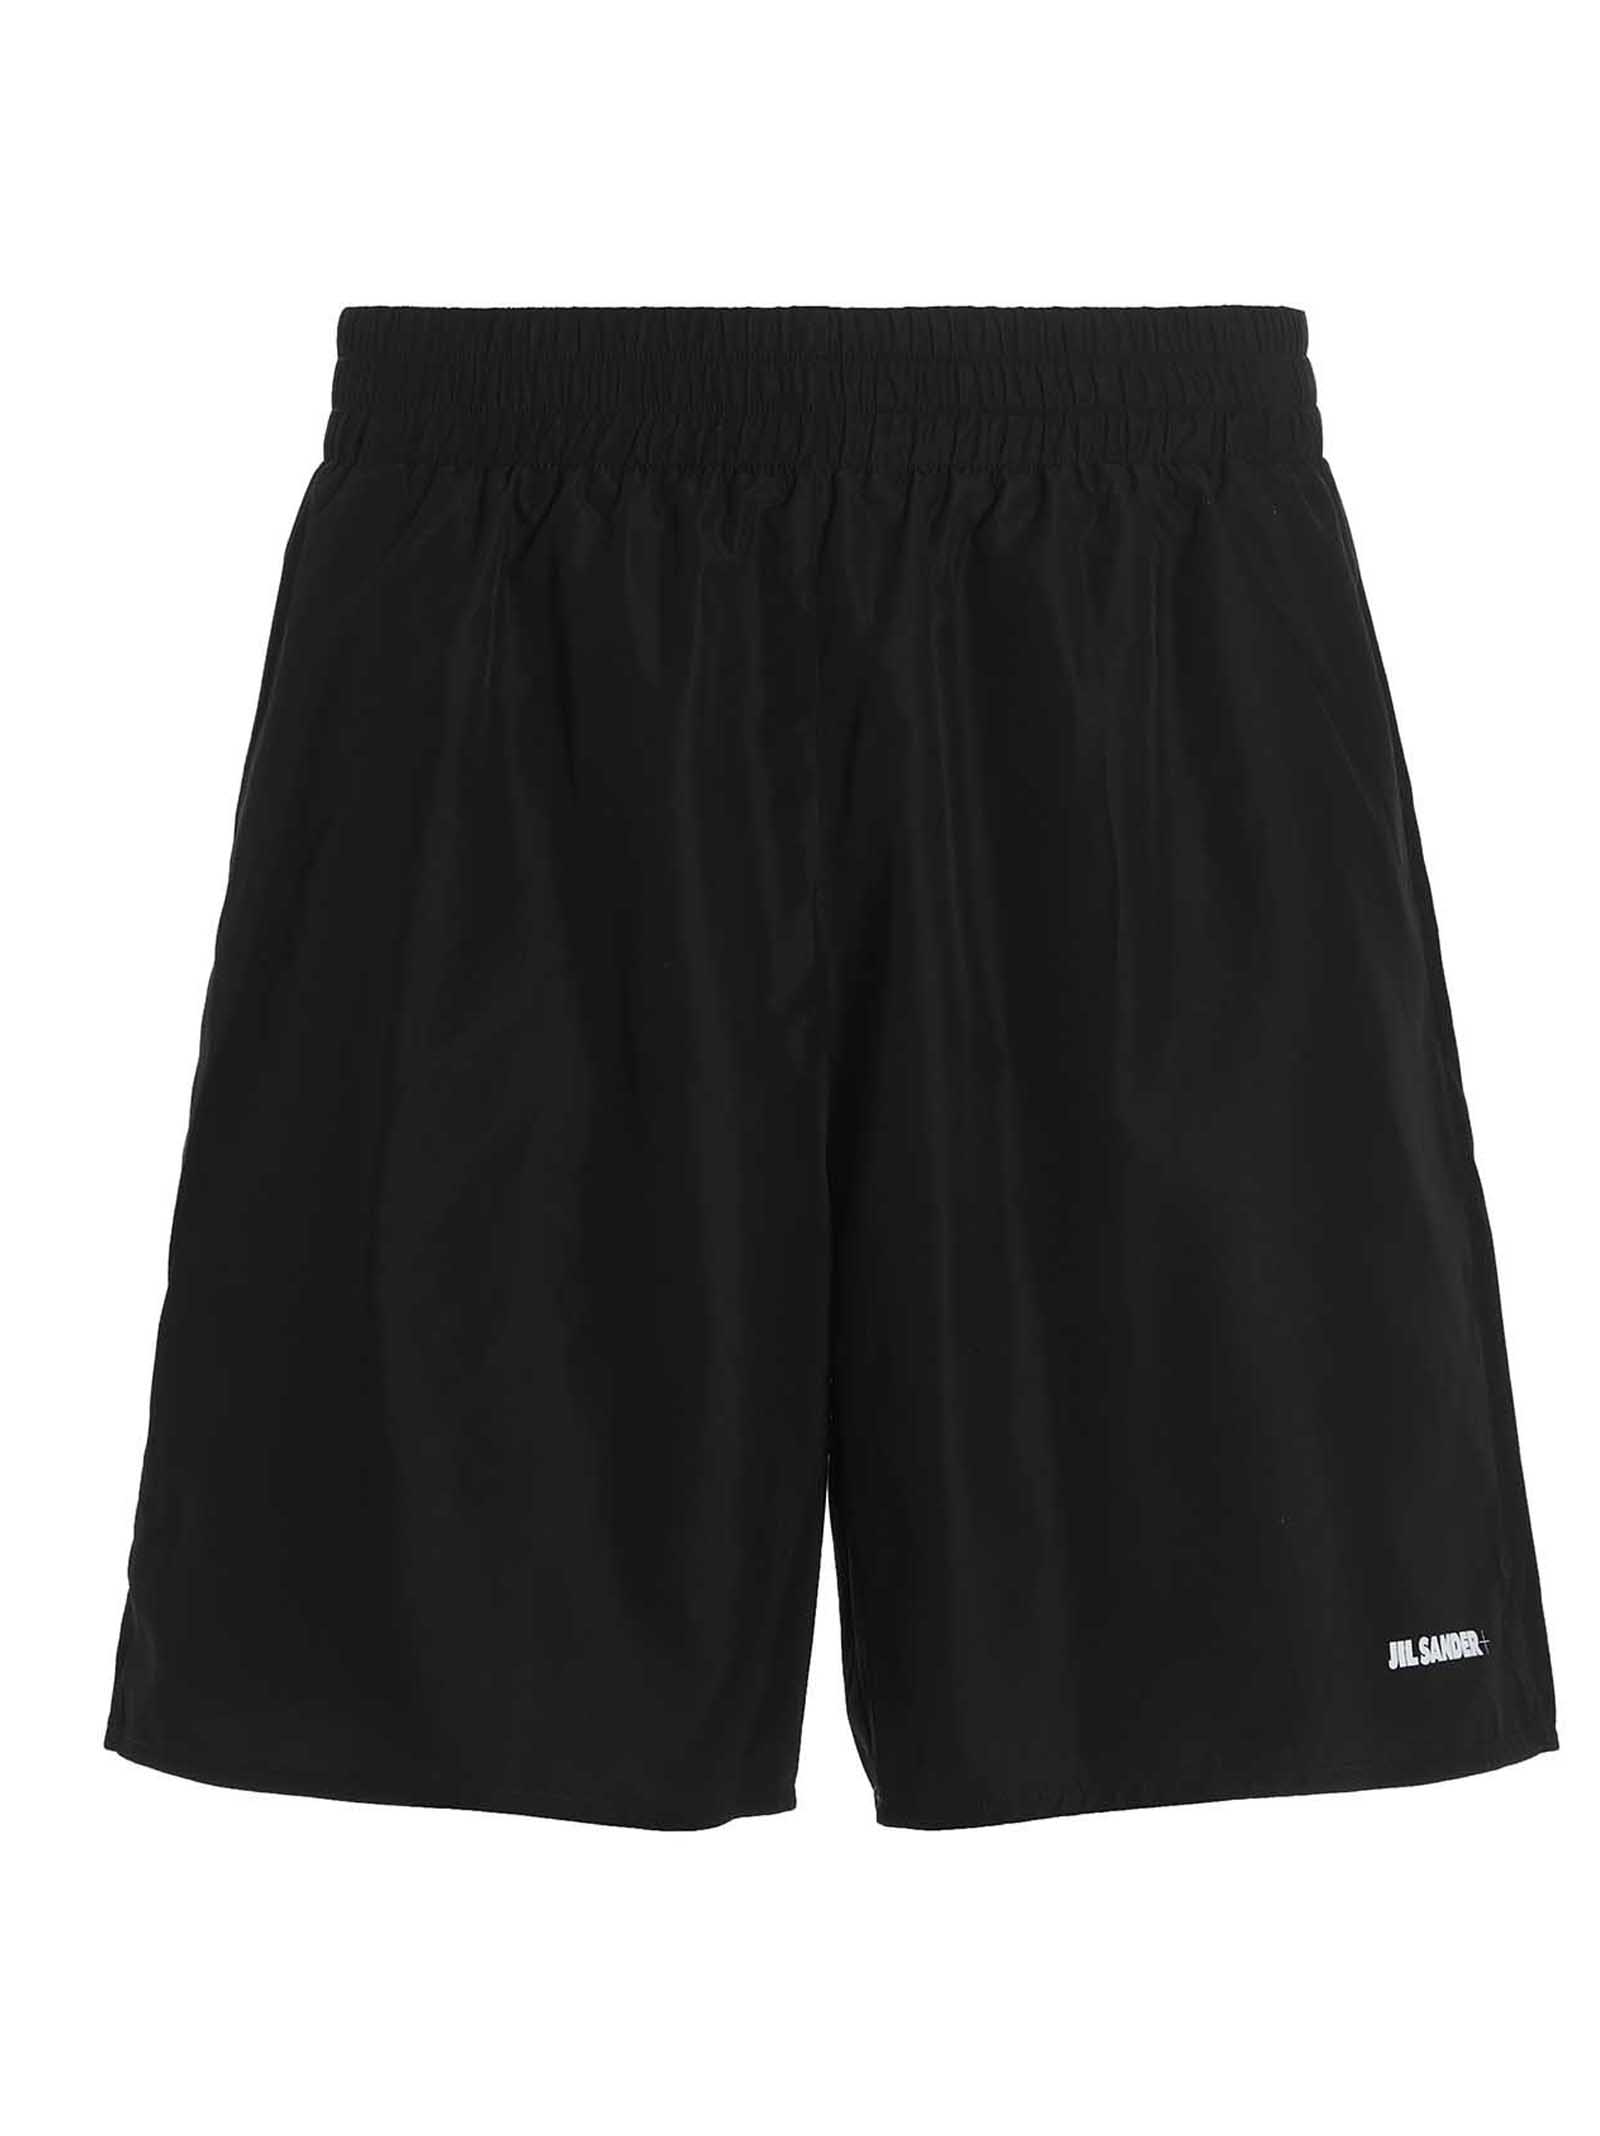 Jil Sander active Bermuda Shorts